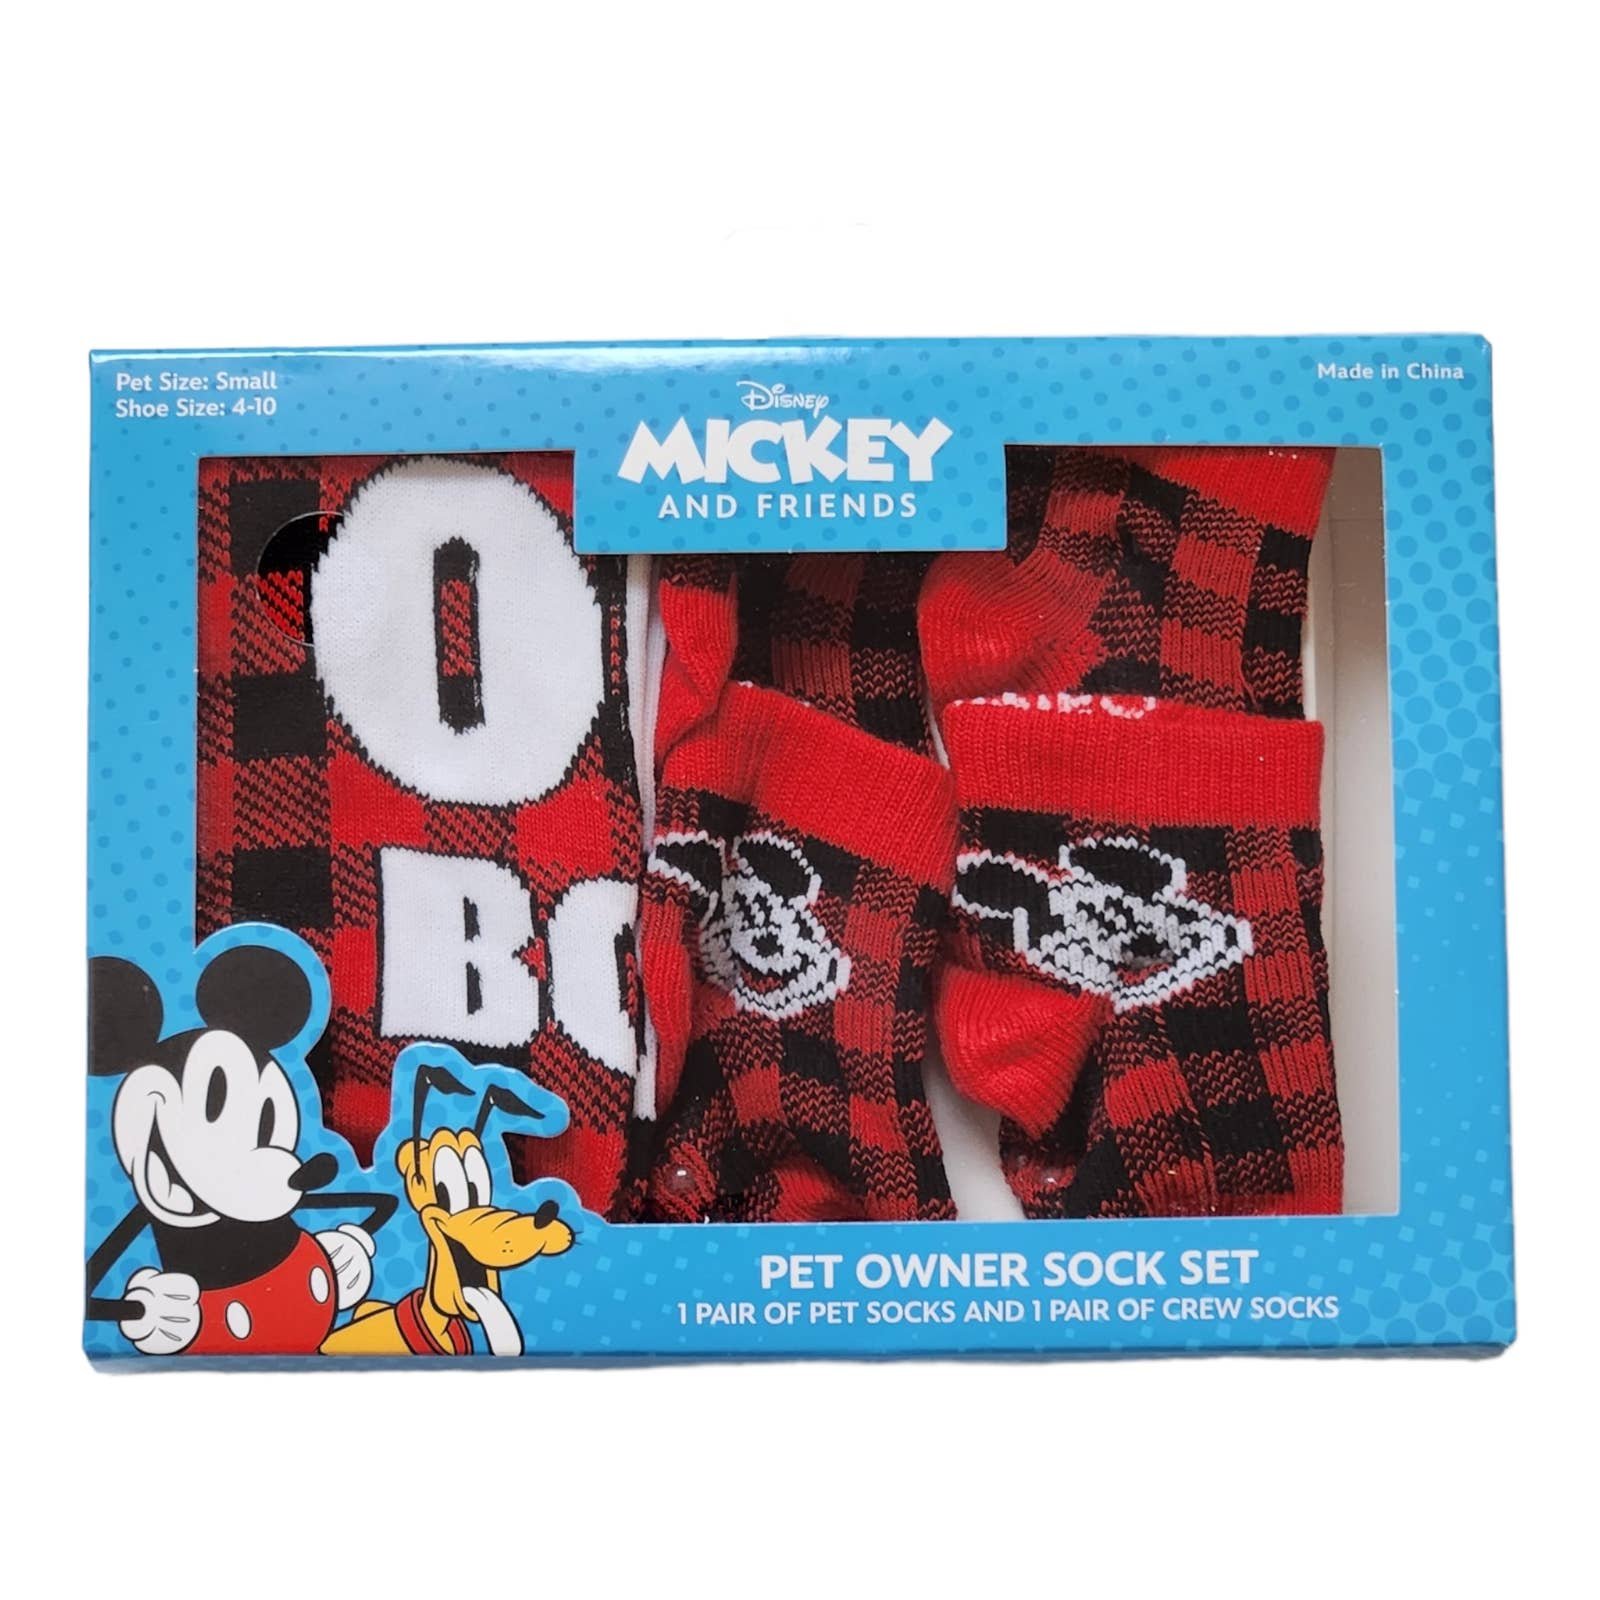 Disney Mickey Mouse Pet Owner Sock Set 8LKiTRJHV